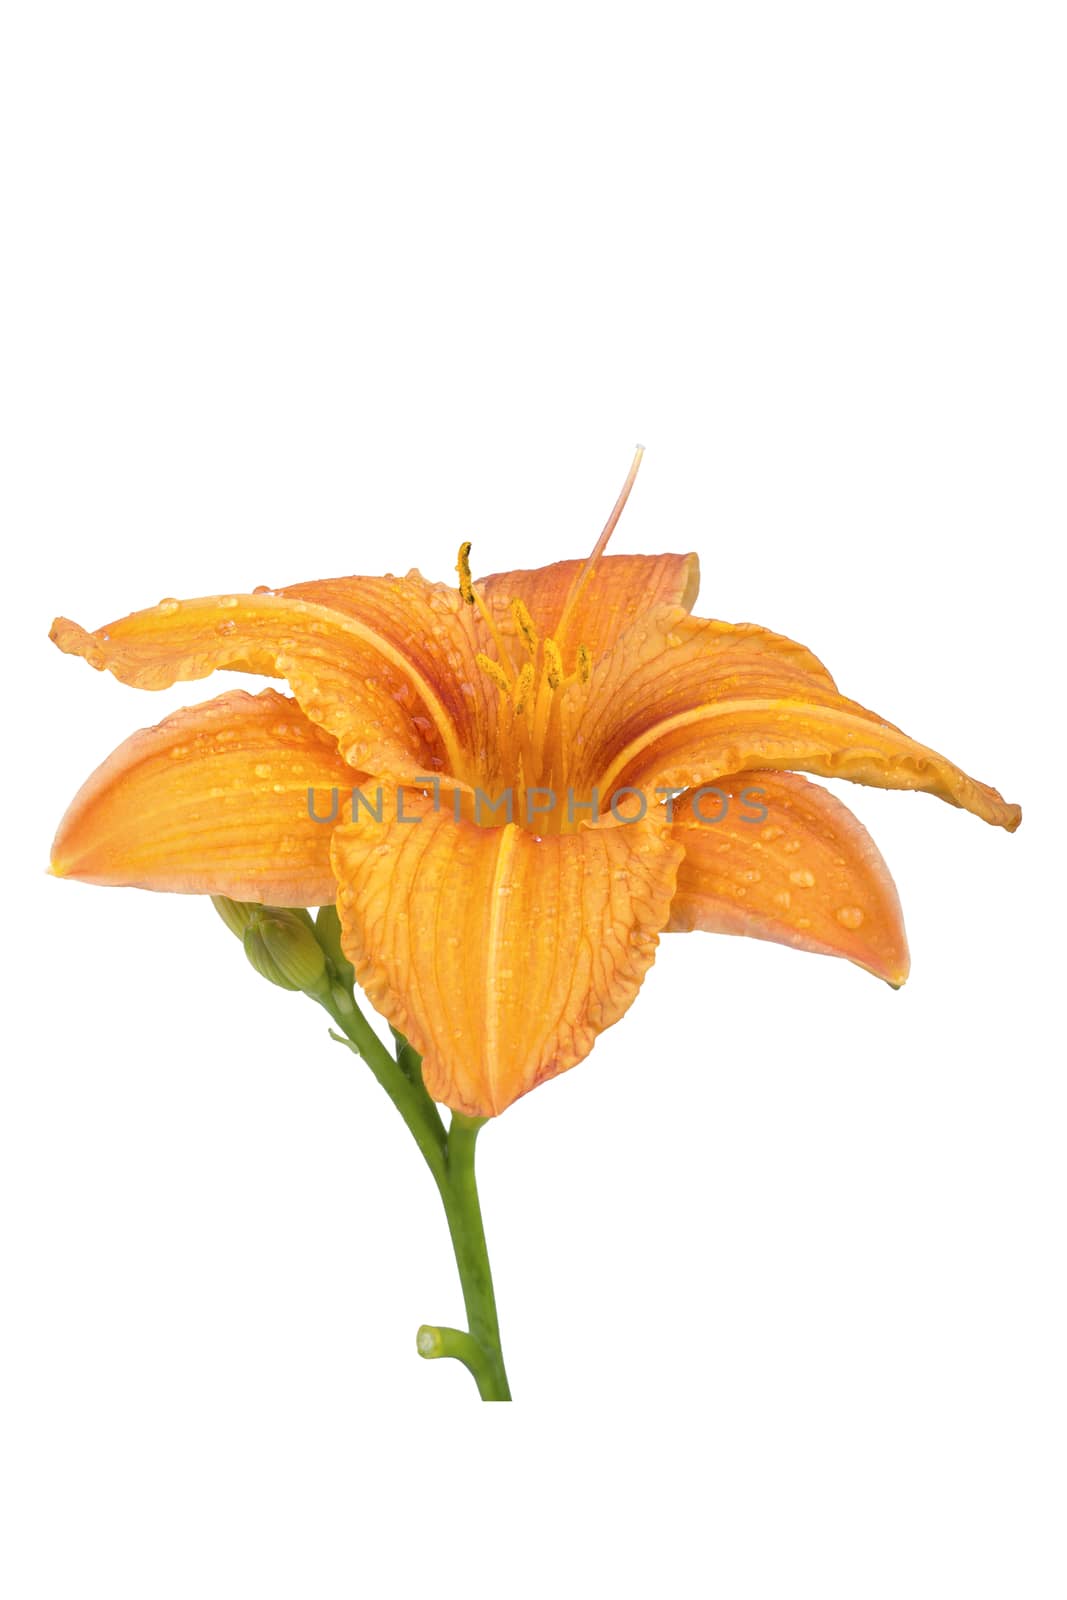 Orange lily flower isolated on white background